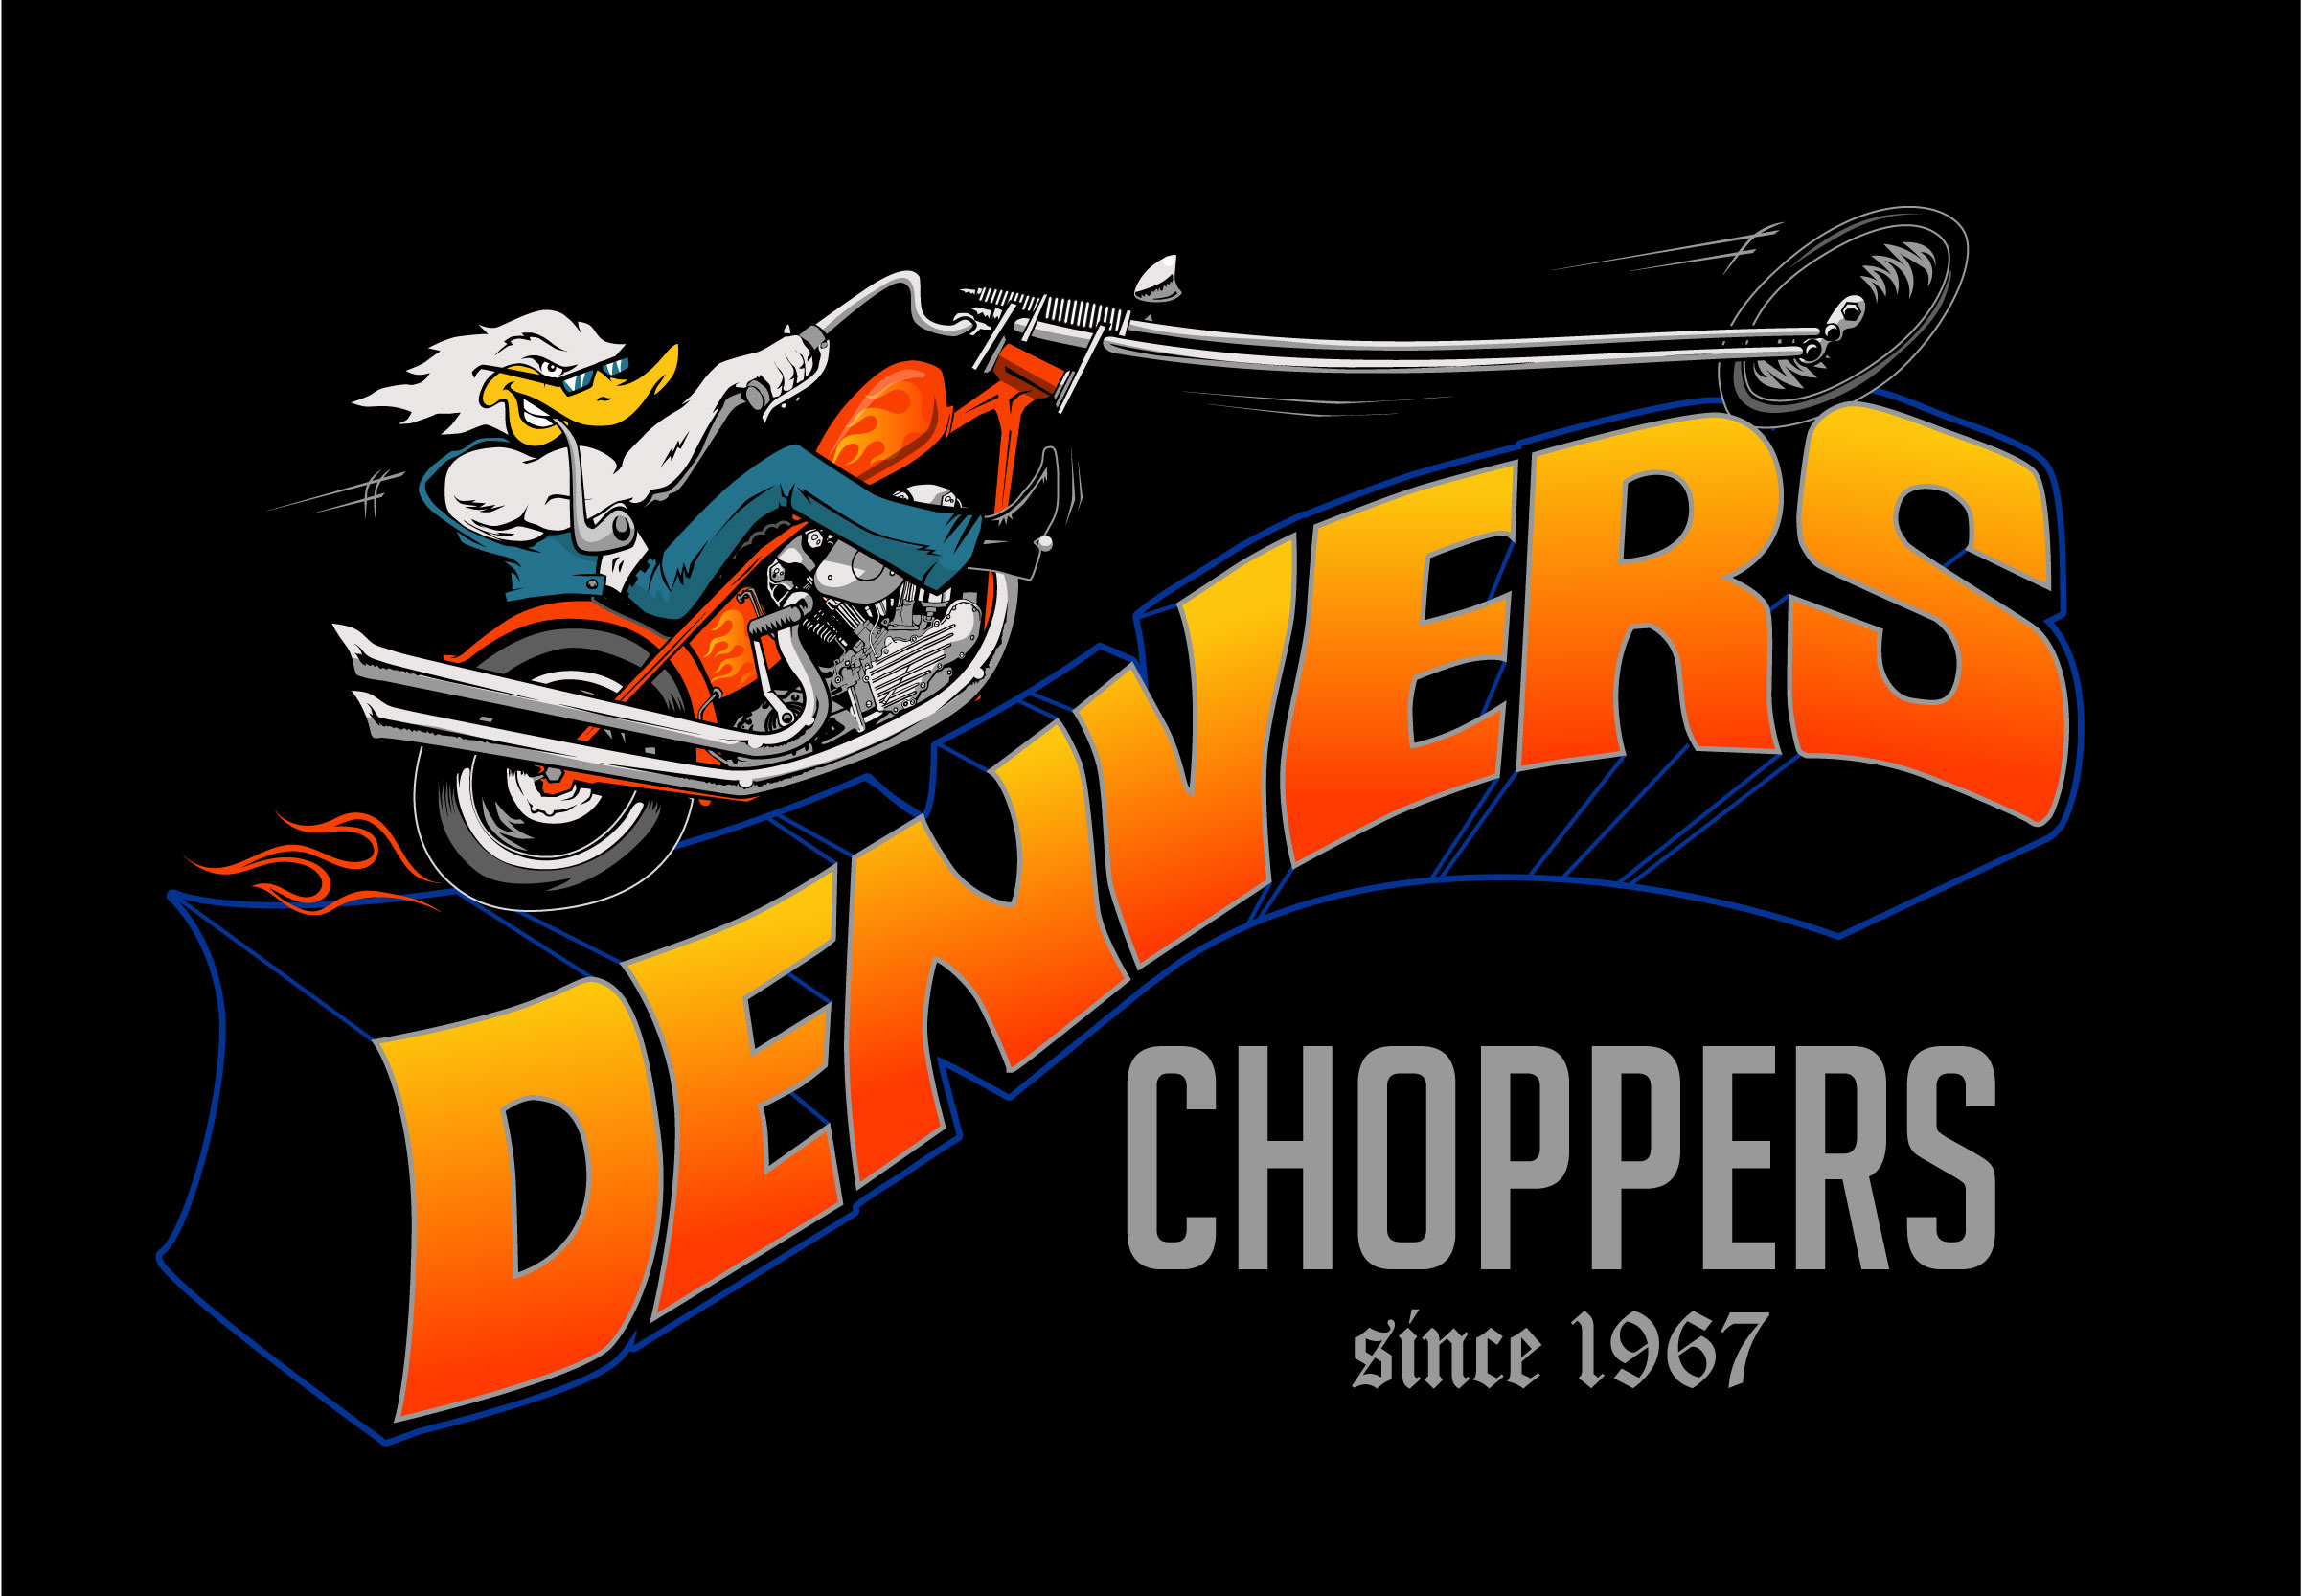 Denver’s Choppers